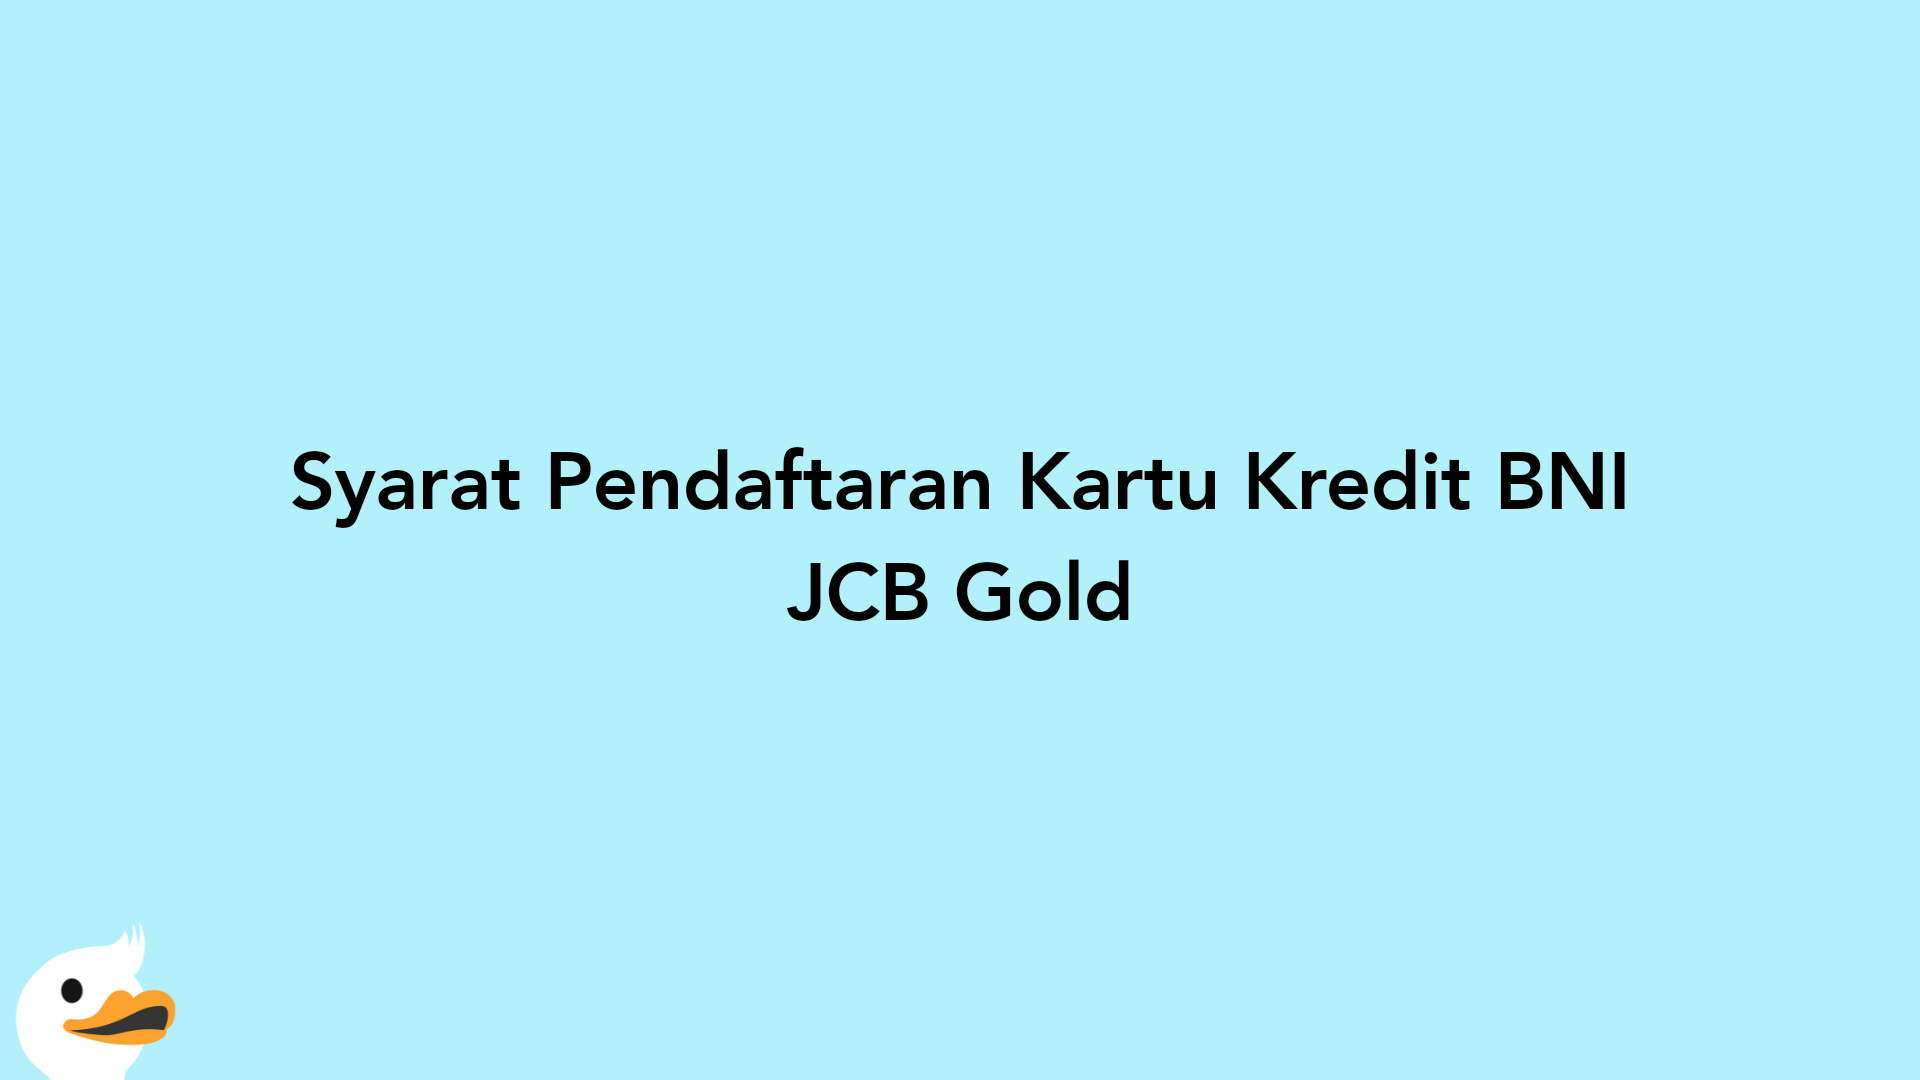 Syarat Pendaftaran Kartu Kredit BNI JCB Gold